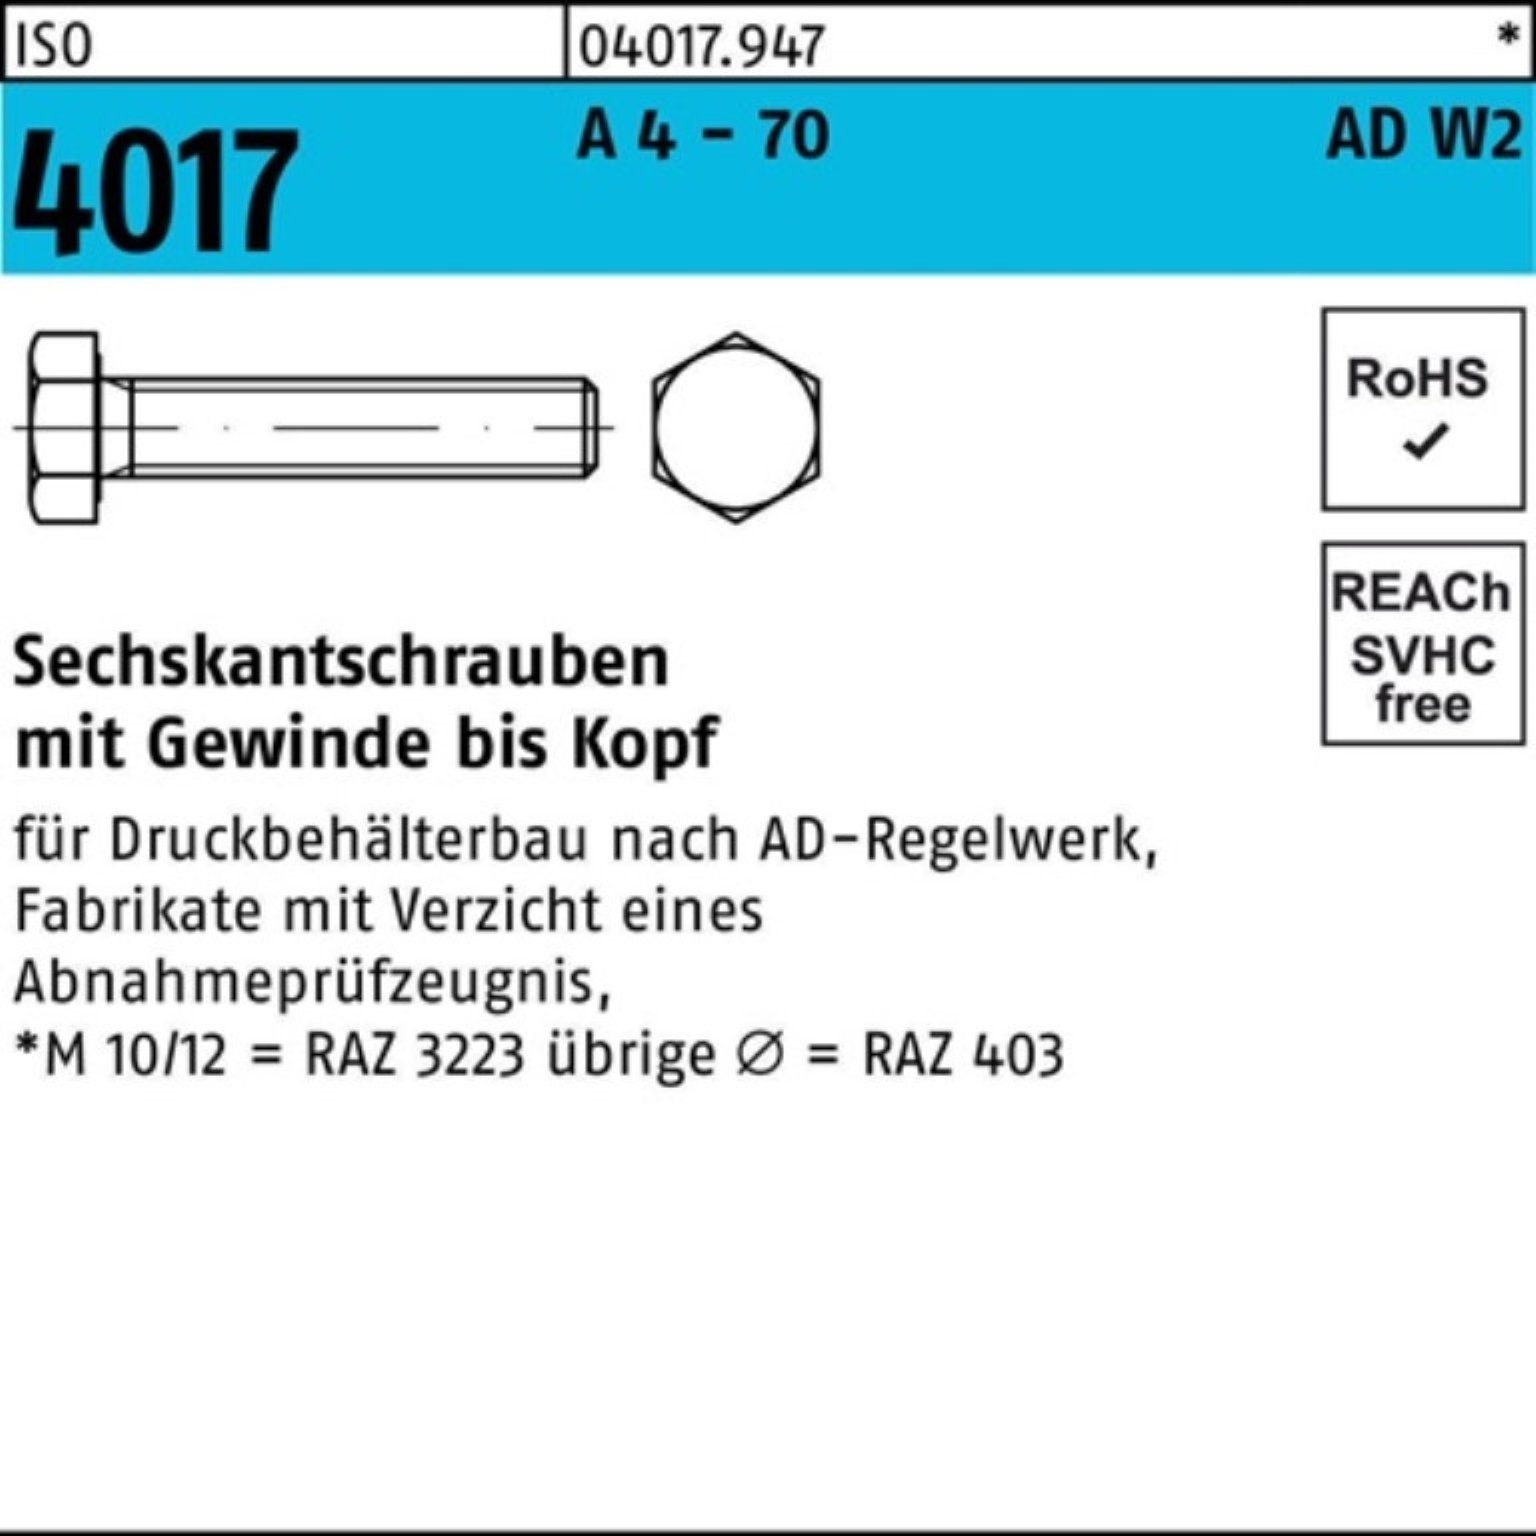 Bufab Sechskantschraube 200er Pack Sechskantschraube ISO 4017 VG M8x 20 A 4 - 70 AD-W2 200 St | Schrauben